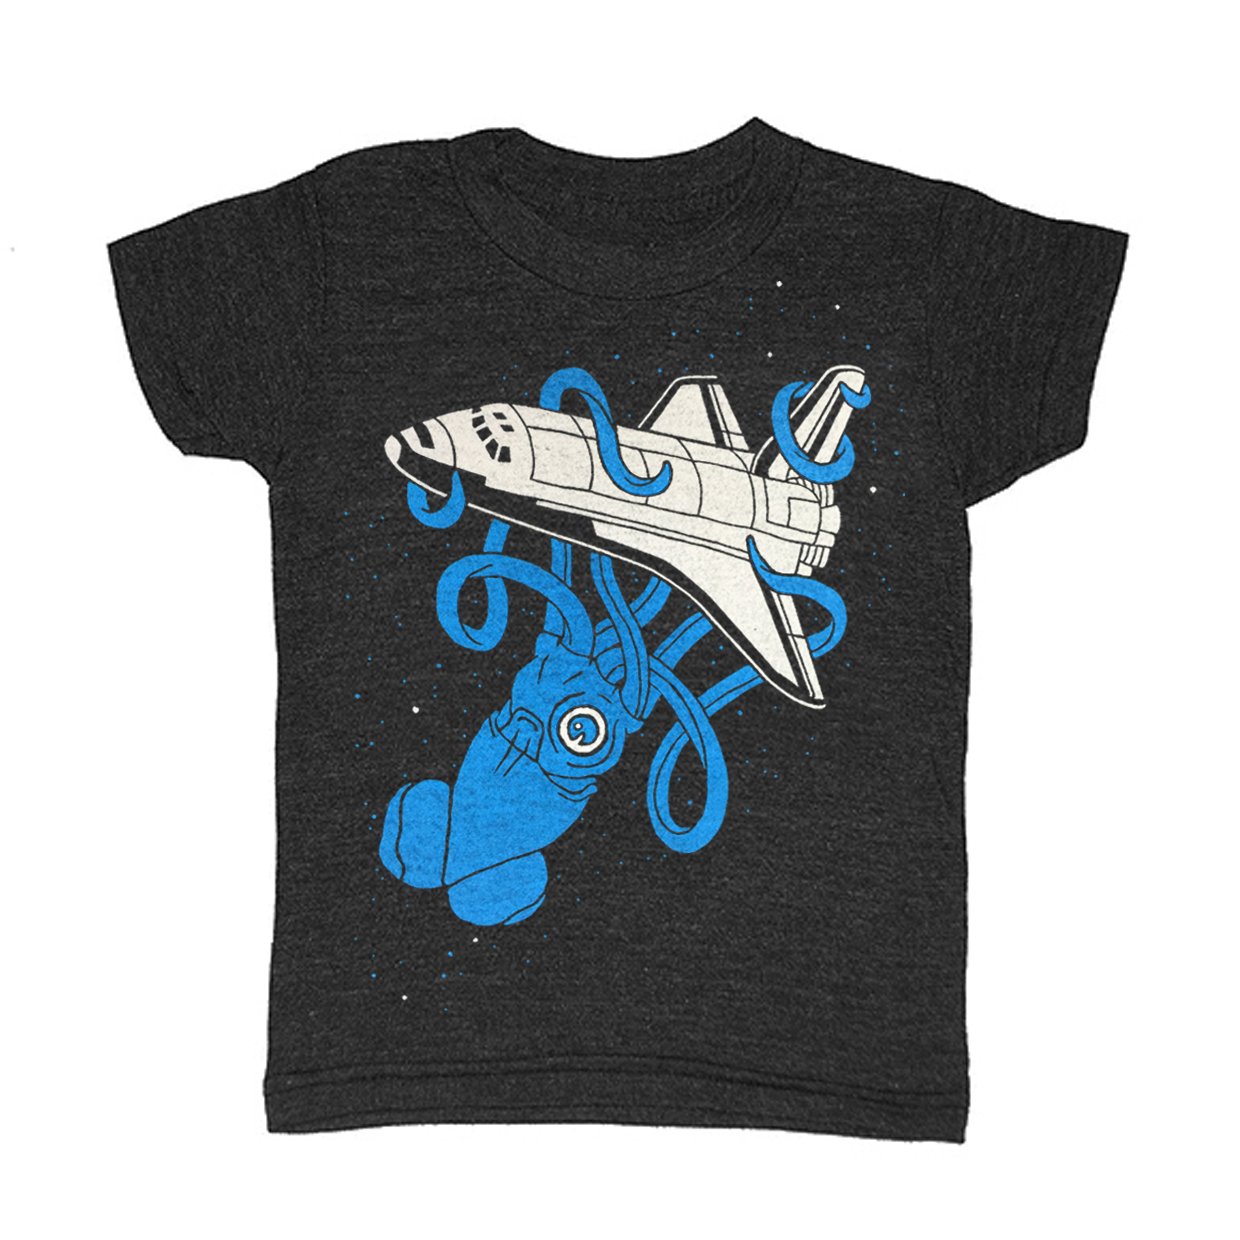 GNOME ENTERPRISES Women | — Kids T-shirts for + Shuttle KIDS Space Men Handprinted + - + Infants